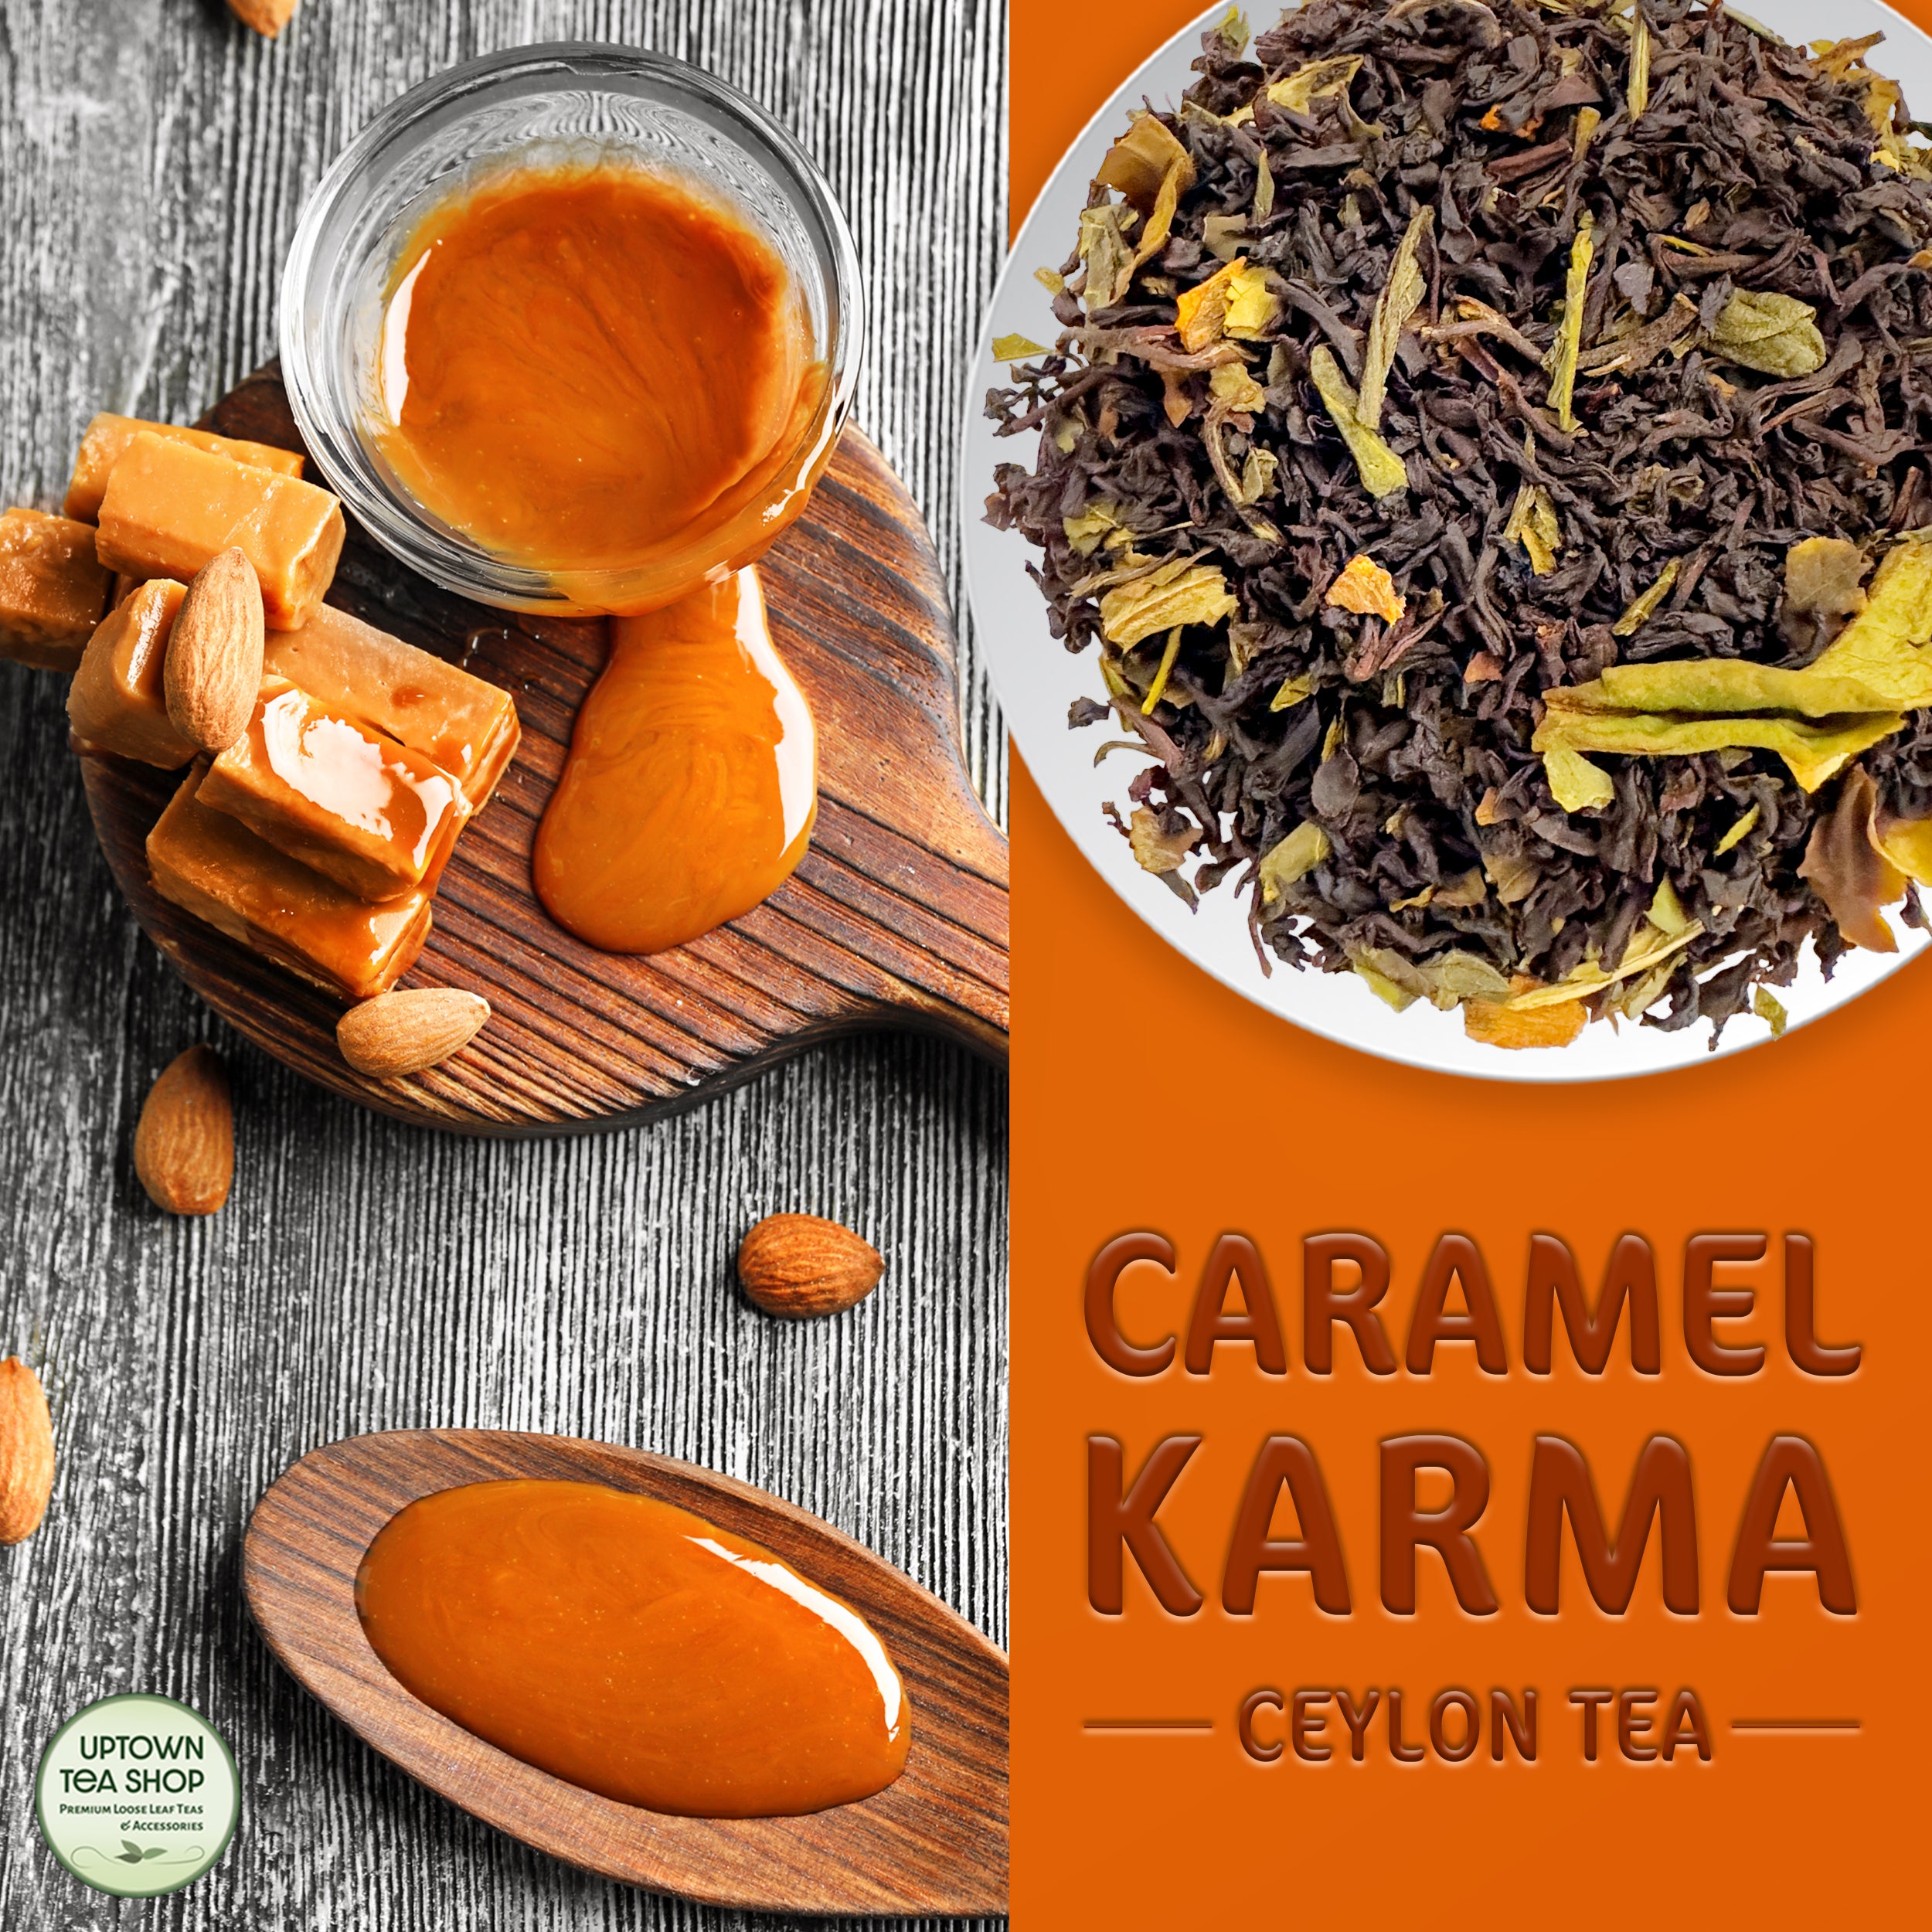 Caramel Karma Ceylon Black Tea